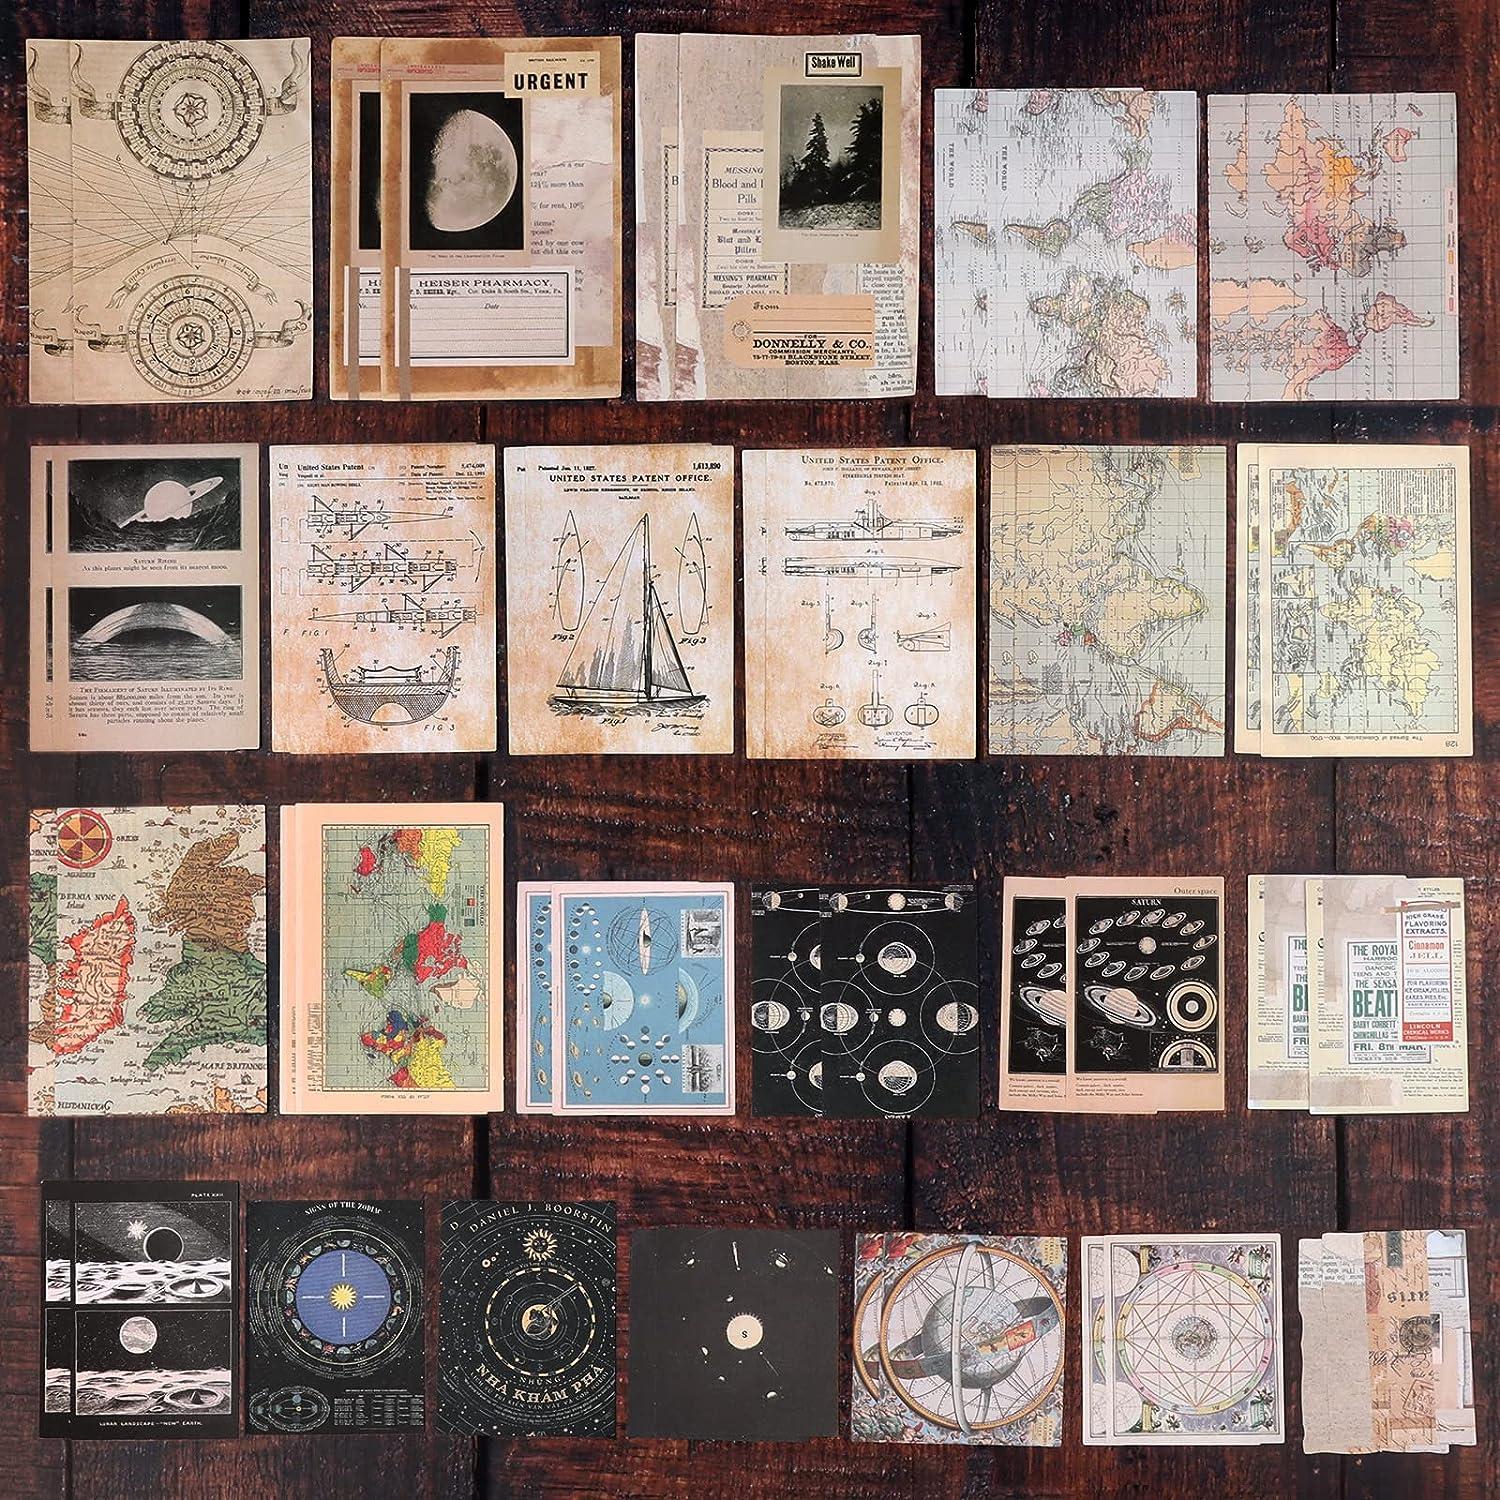  Draupnir Vintage Scrapbook Supplies Pack (100pcs) for Bullet  Journaling Art Junk Journal Ephemera Planners DIY Stickers Craft Paper Kits  Notebook Collage Album Aesthetic Cottagecore